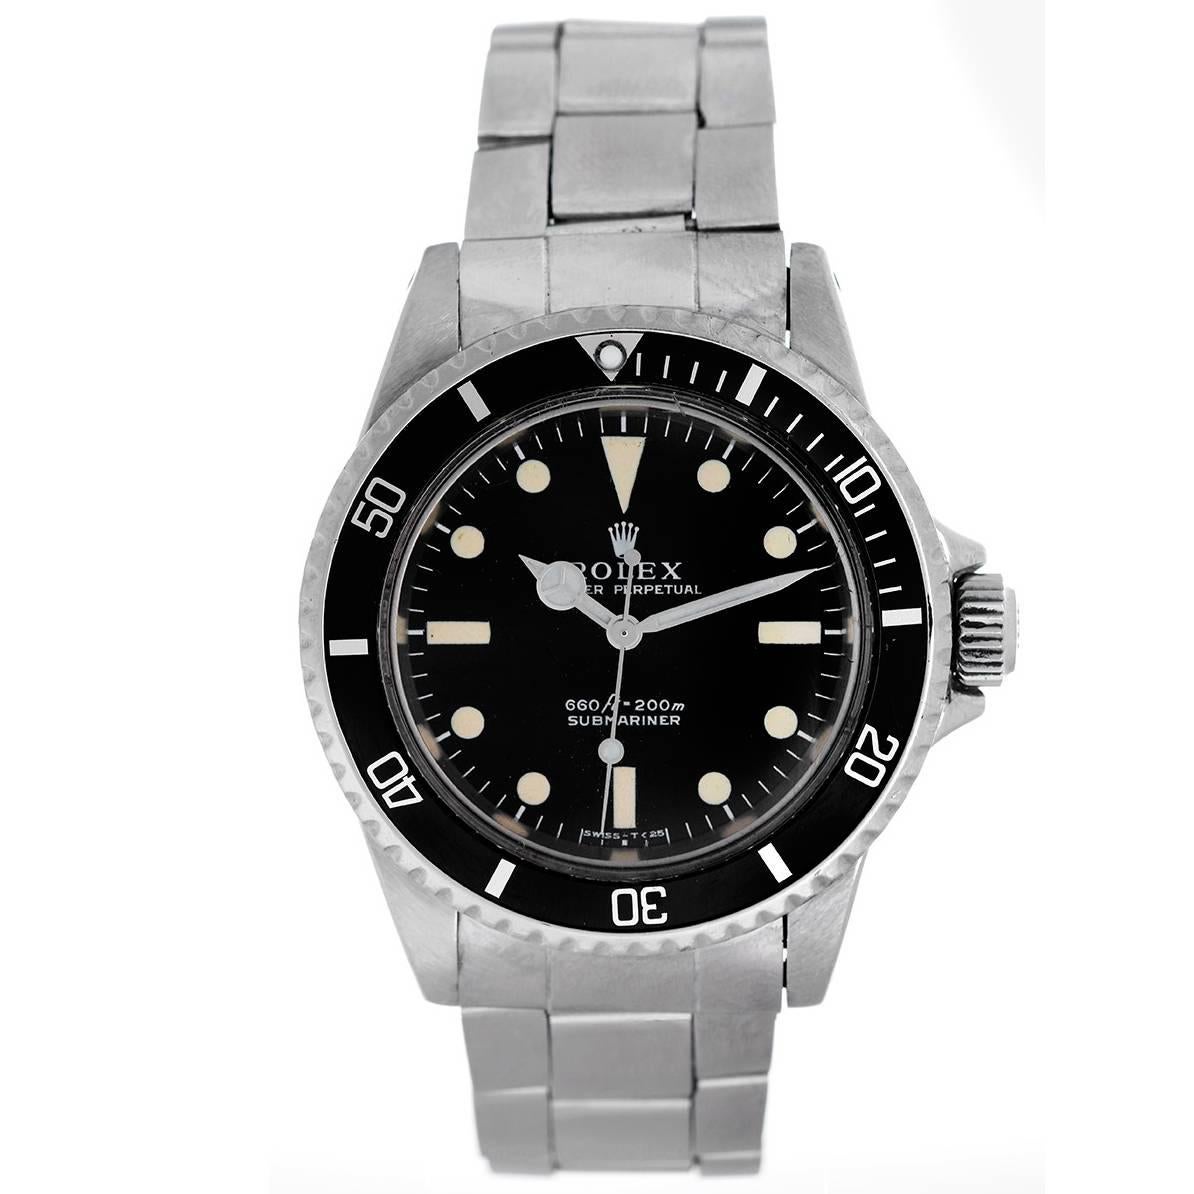 Rolex Stainless Steel Submariner Automatic Wristwatch Ref 5513